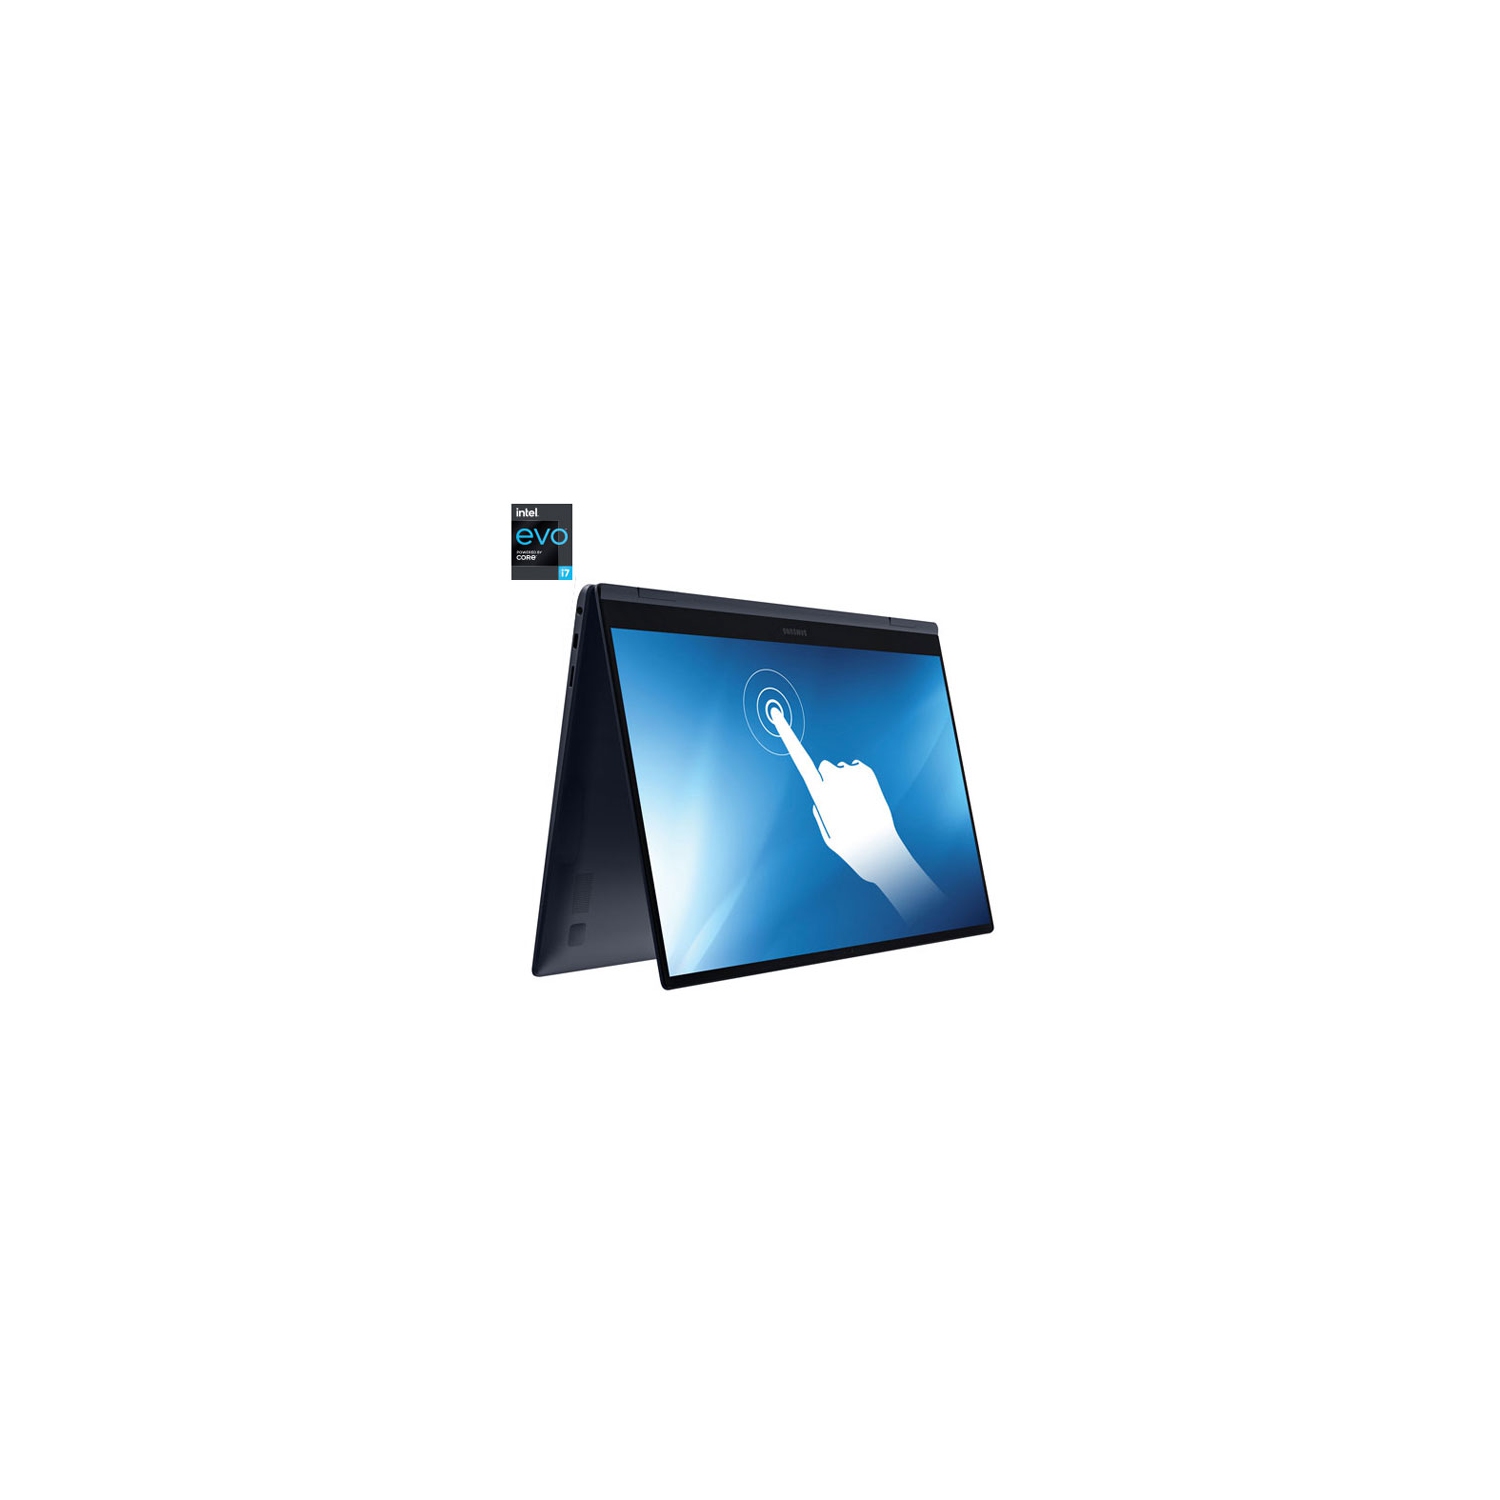 Samsung Galaxy Book Pro 360 15.6" Touchscreen 2-in-1 Laptop (Intel Ci7-1165G7/512GB SSD/16GB RAM/Win 11) - Open Box